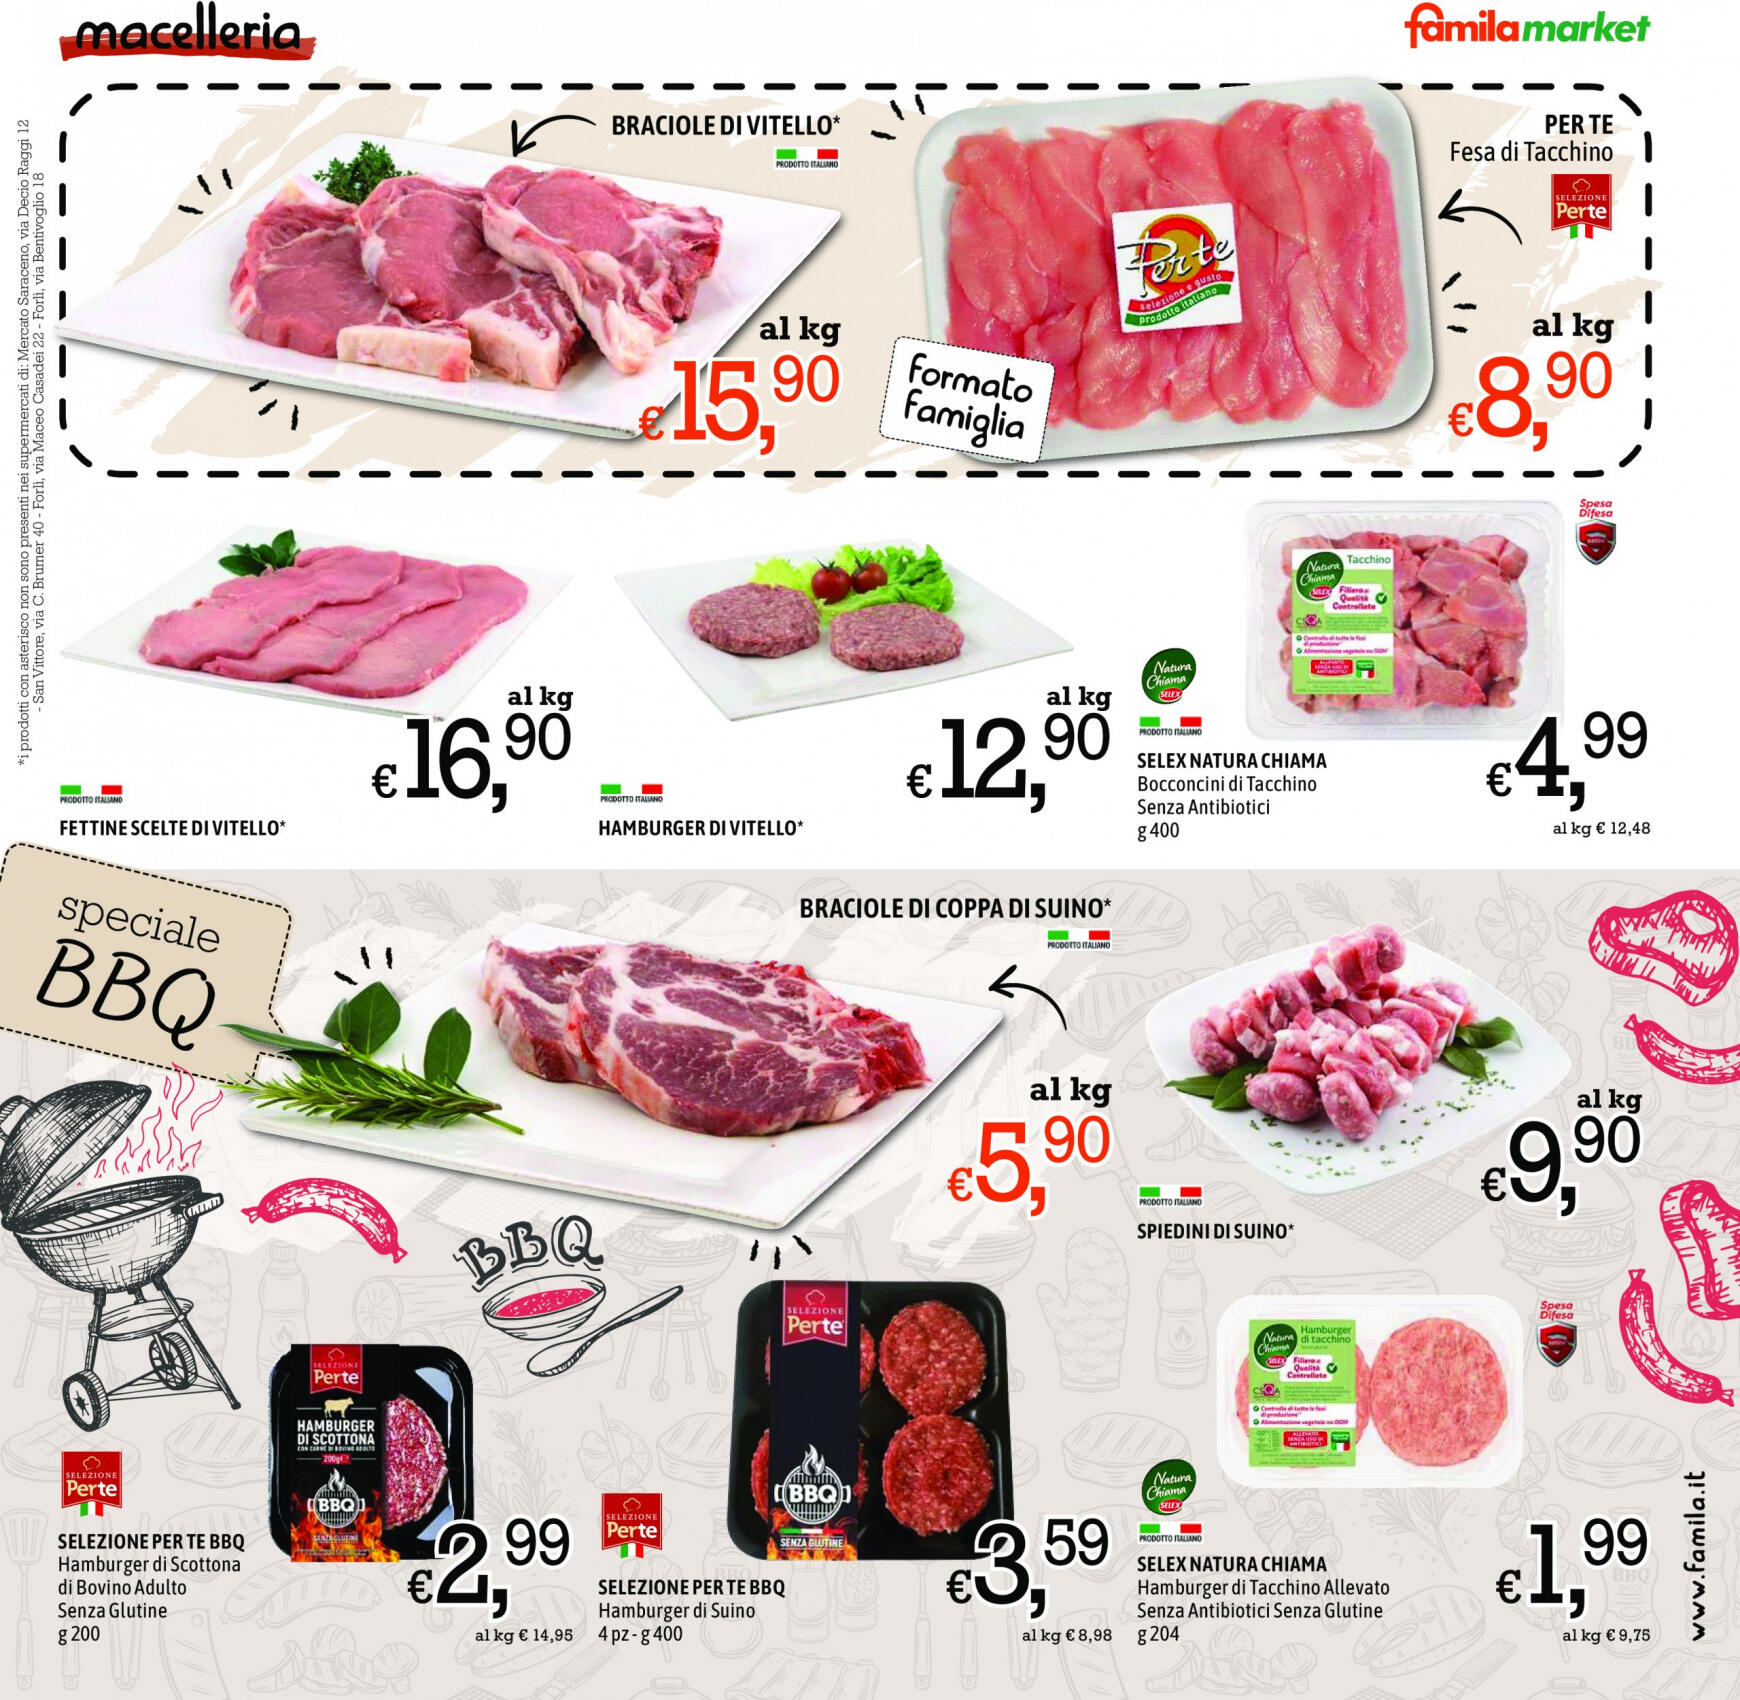 famila - Nuovo volantino Famila market 09.05. - 22.05. - page: 3